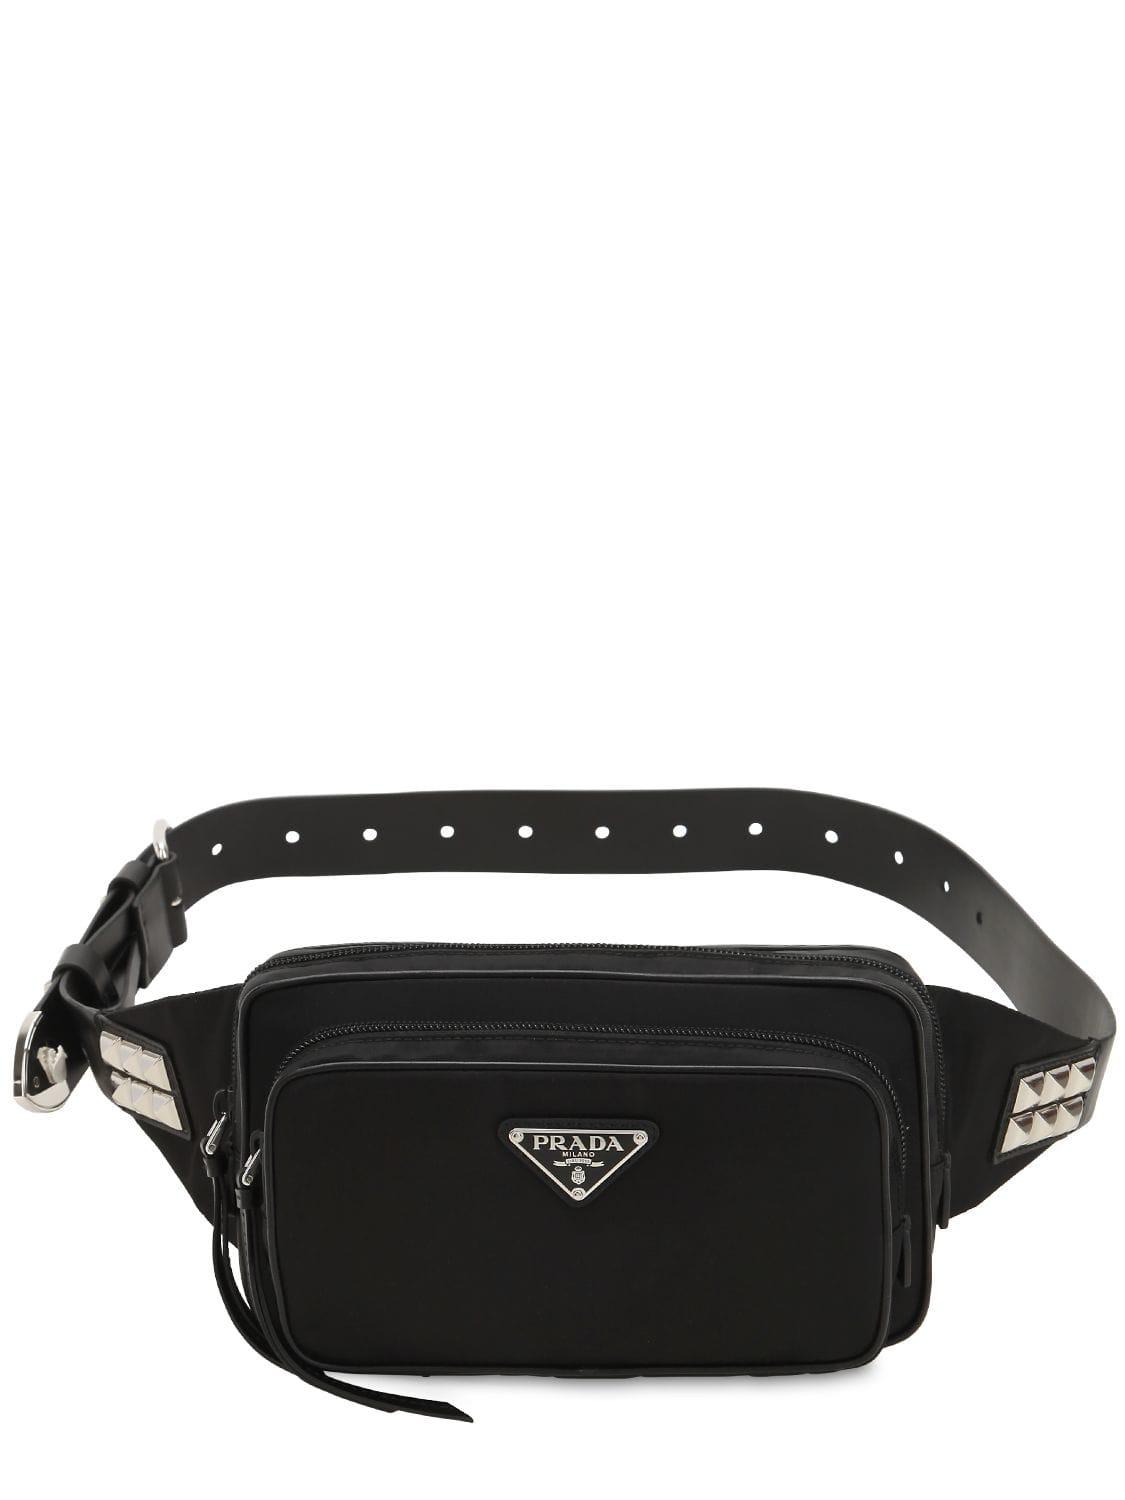 Prada Synthetic New Vela Nylon Belt Bag W/ Studs in Black | Lyst UK